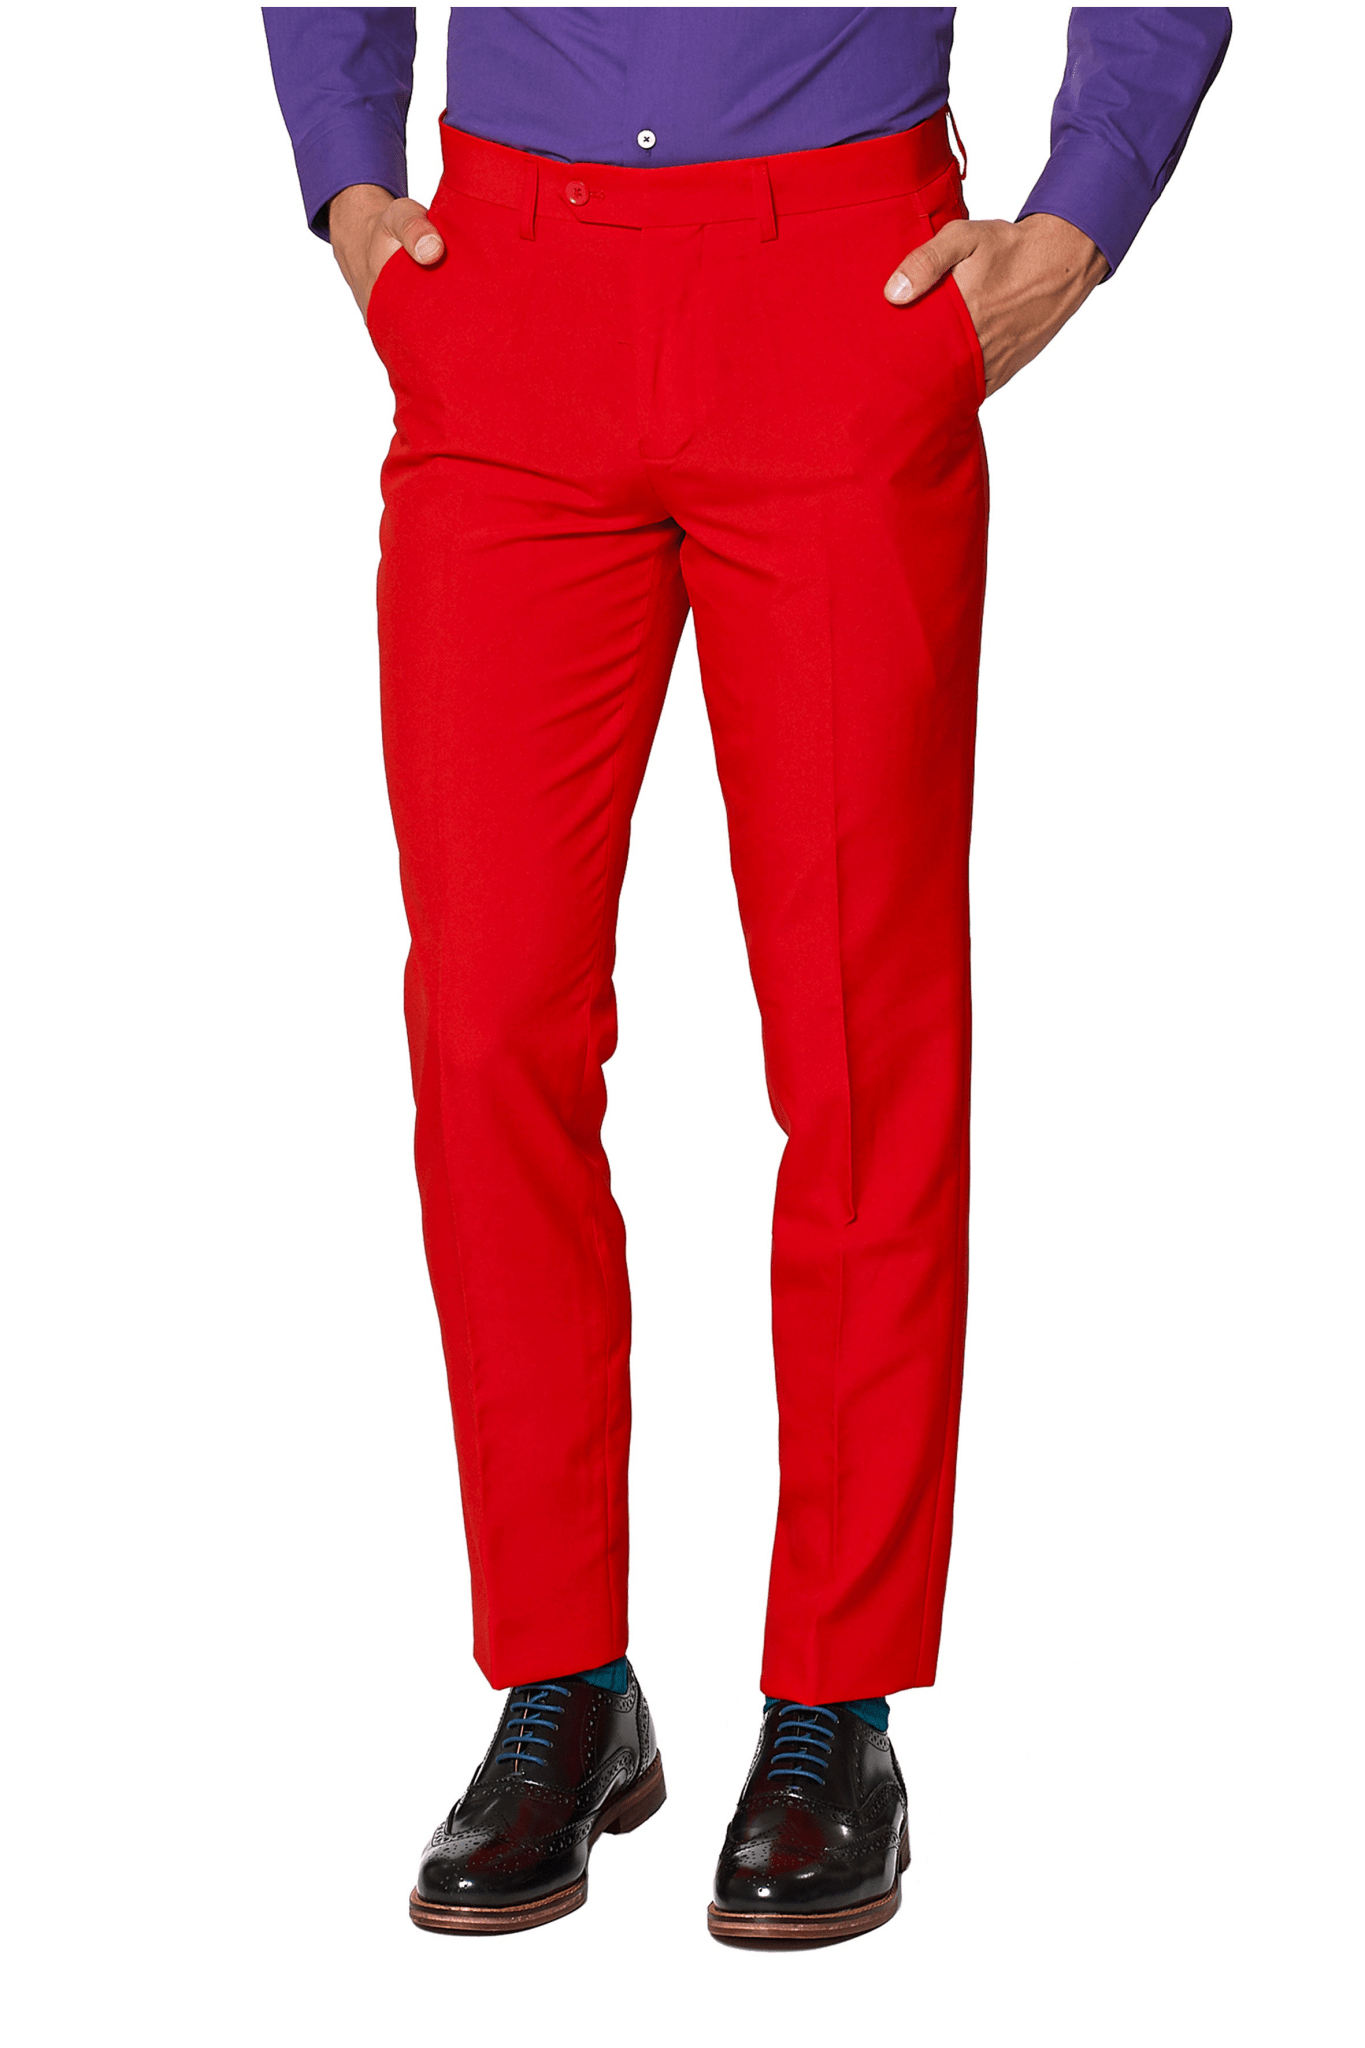 OppoSuits Mens Red Devil Suit - Simply Fancy Dress